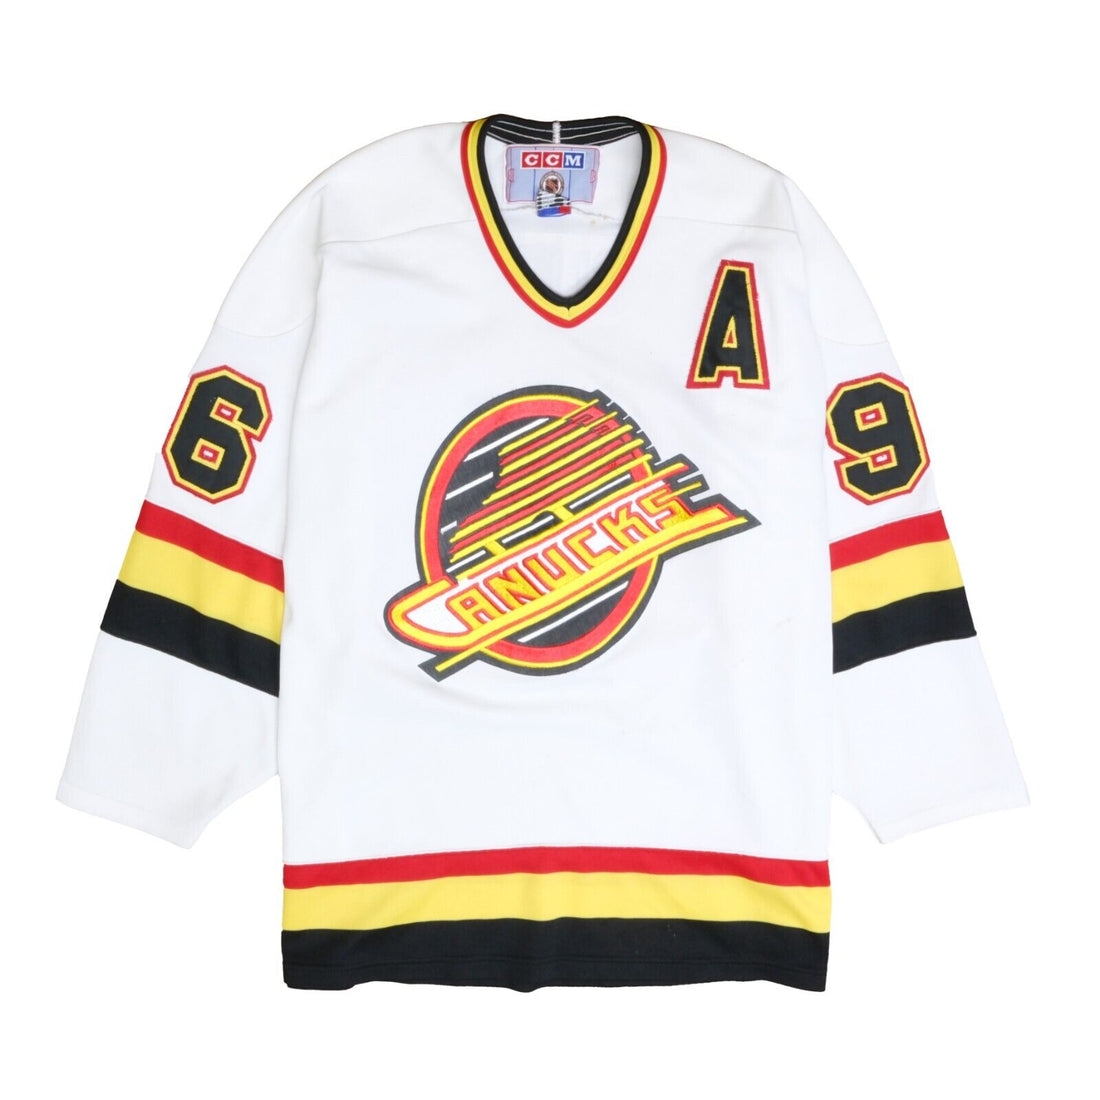 1991 Pavel Bure Vancouver Canucks NHL ccm jersey size xl new